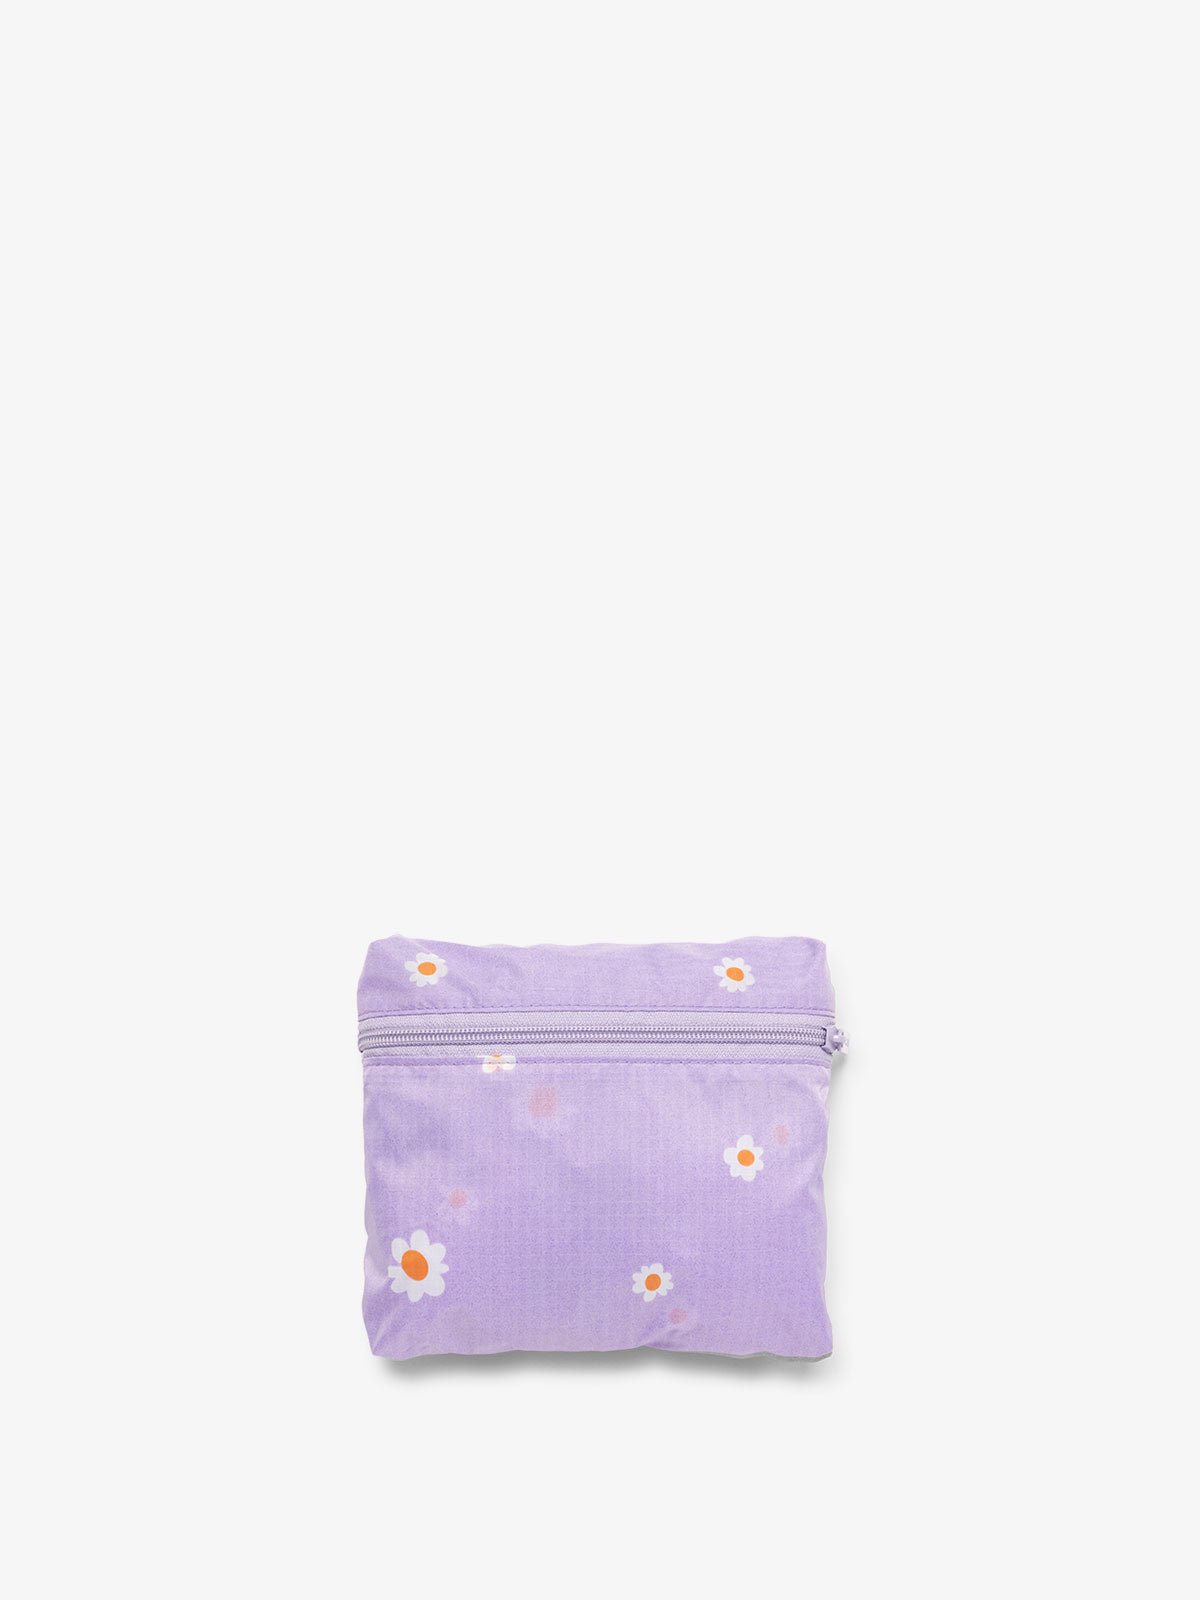 CALPAK Compakt foldable tote bag in orchid fields purple